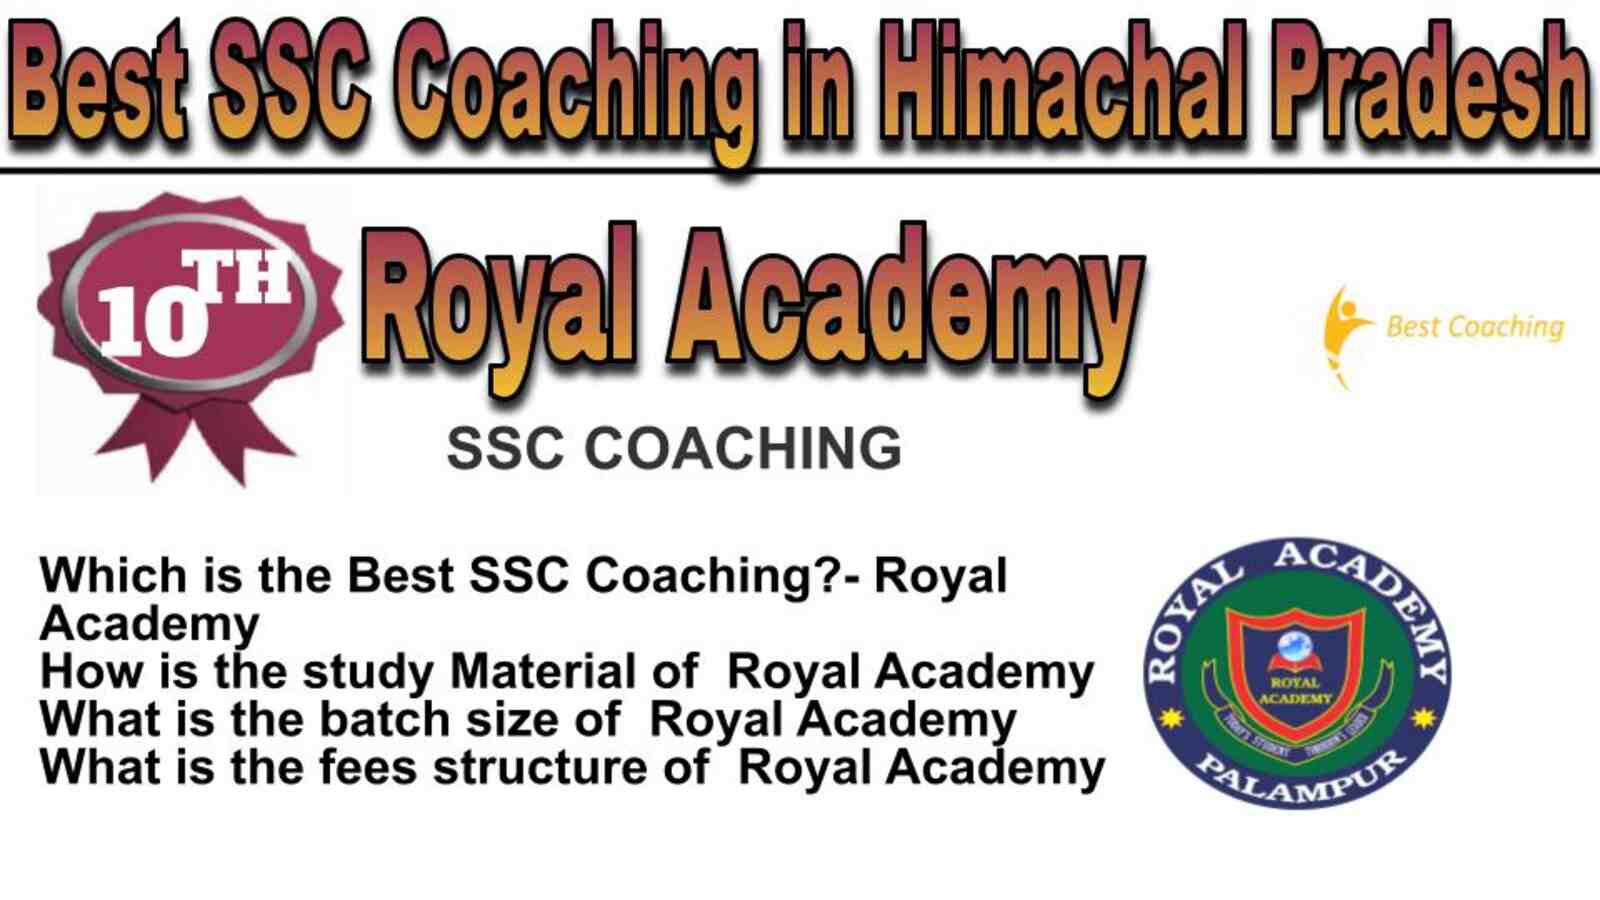 Rank 10 best SSC coaching in Himachal Pradesh